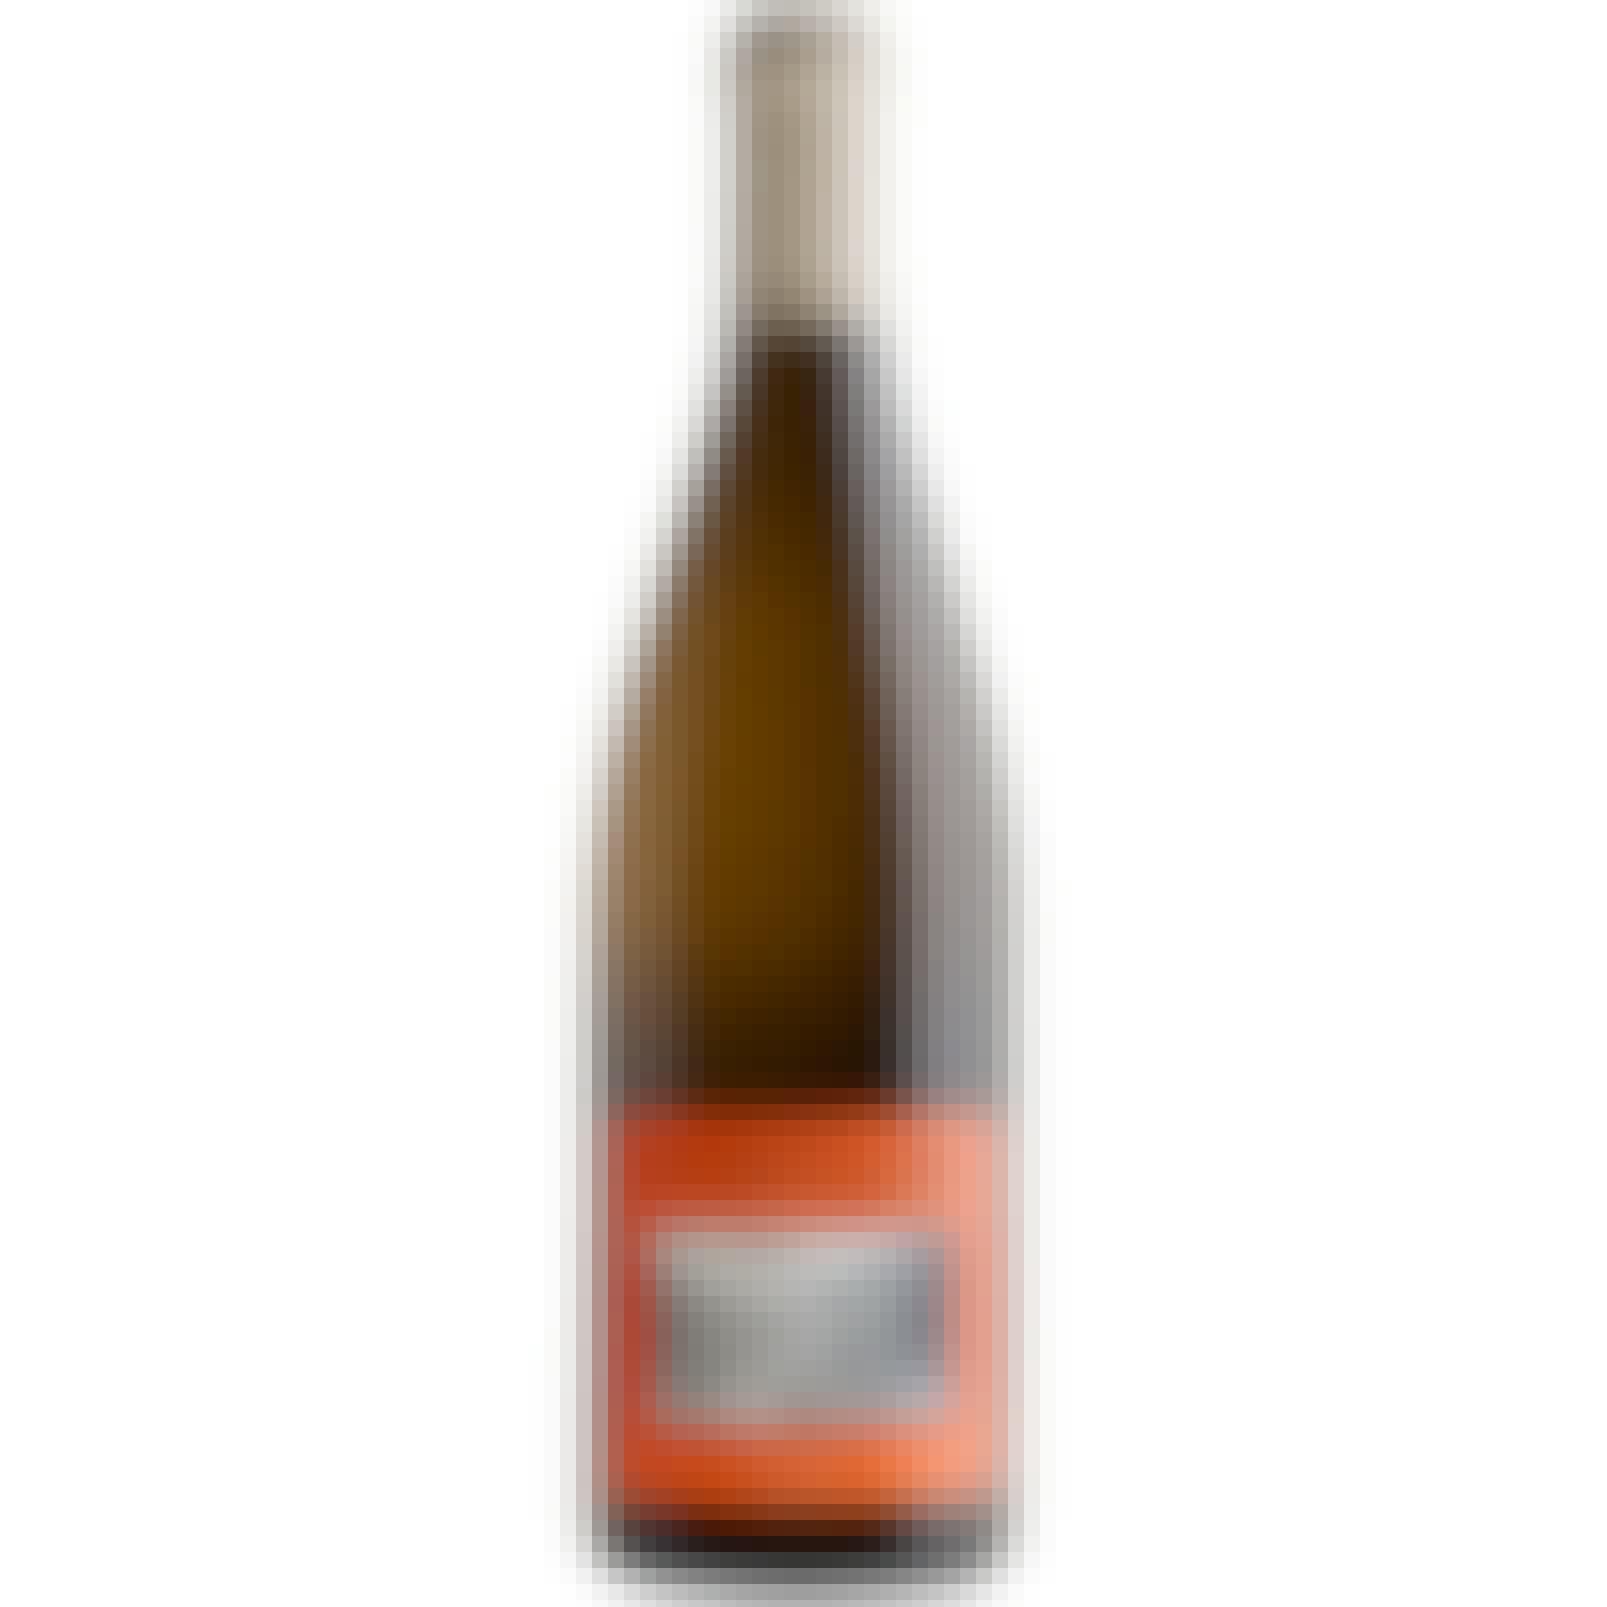 Molnar Family Poseidon's Vineyard Chardonnay 2019 750ml